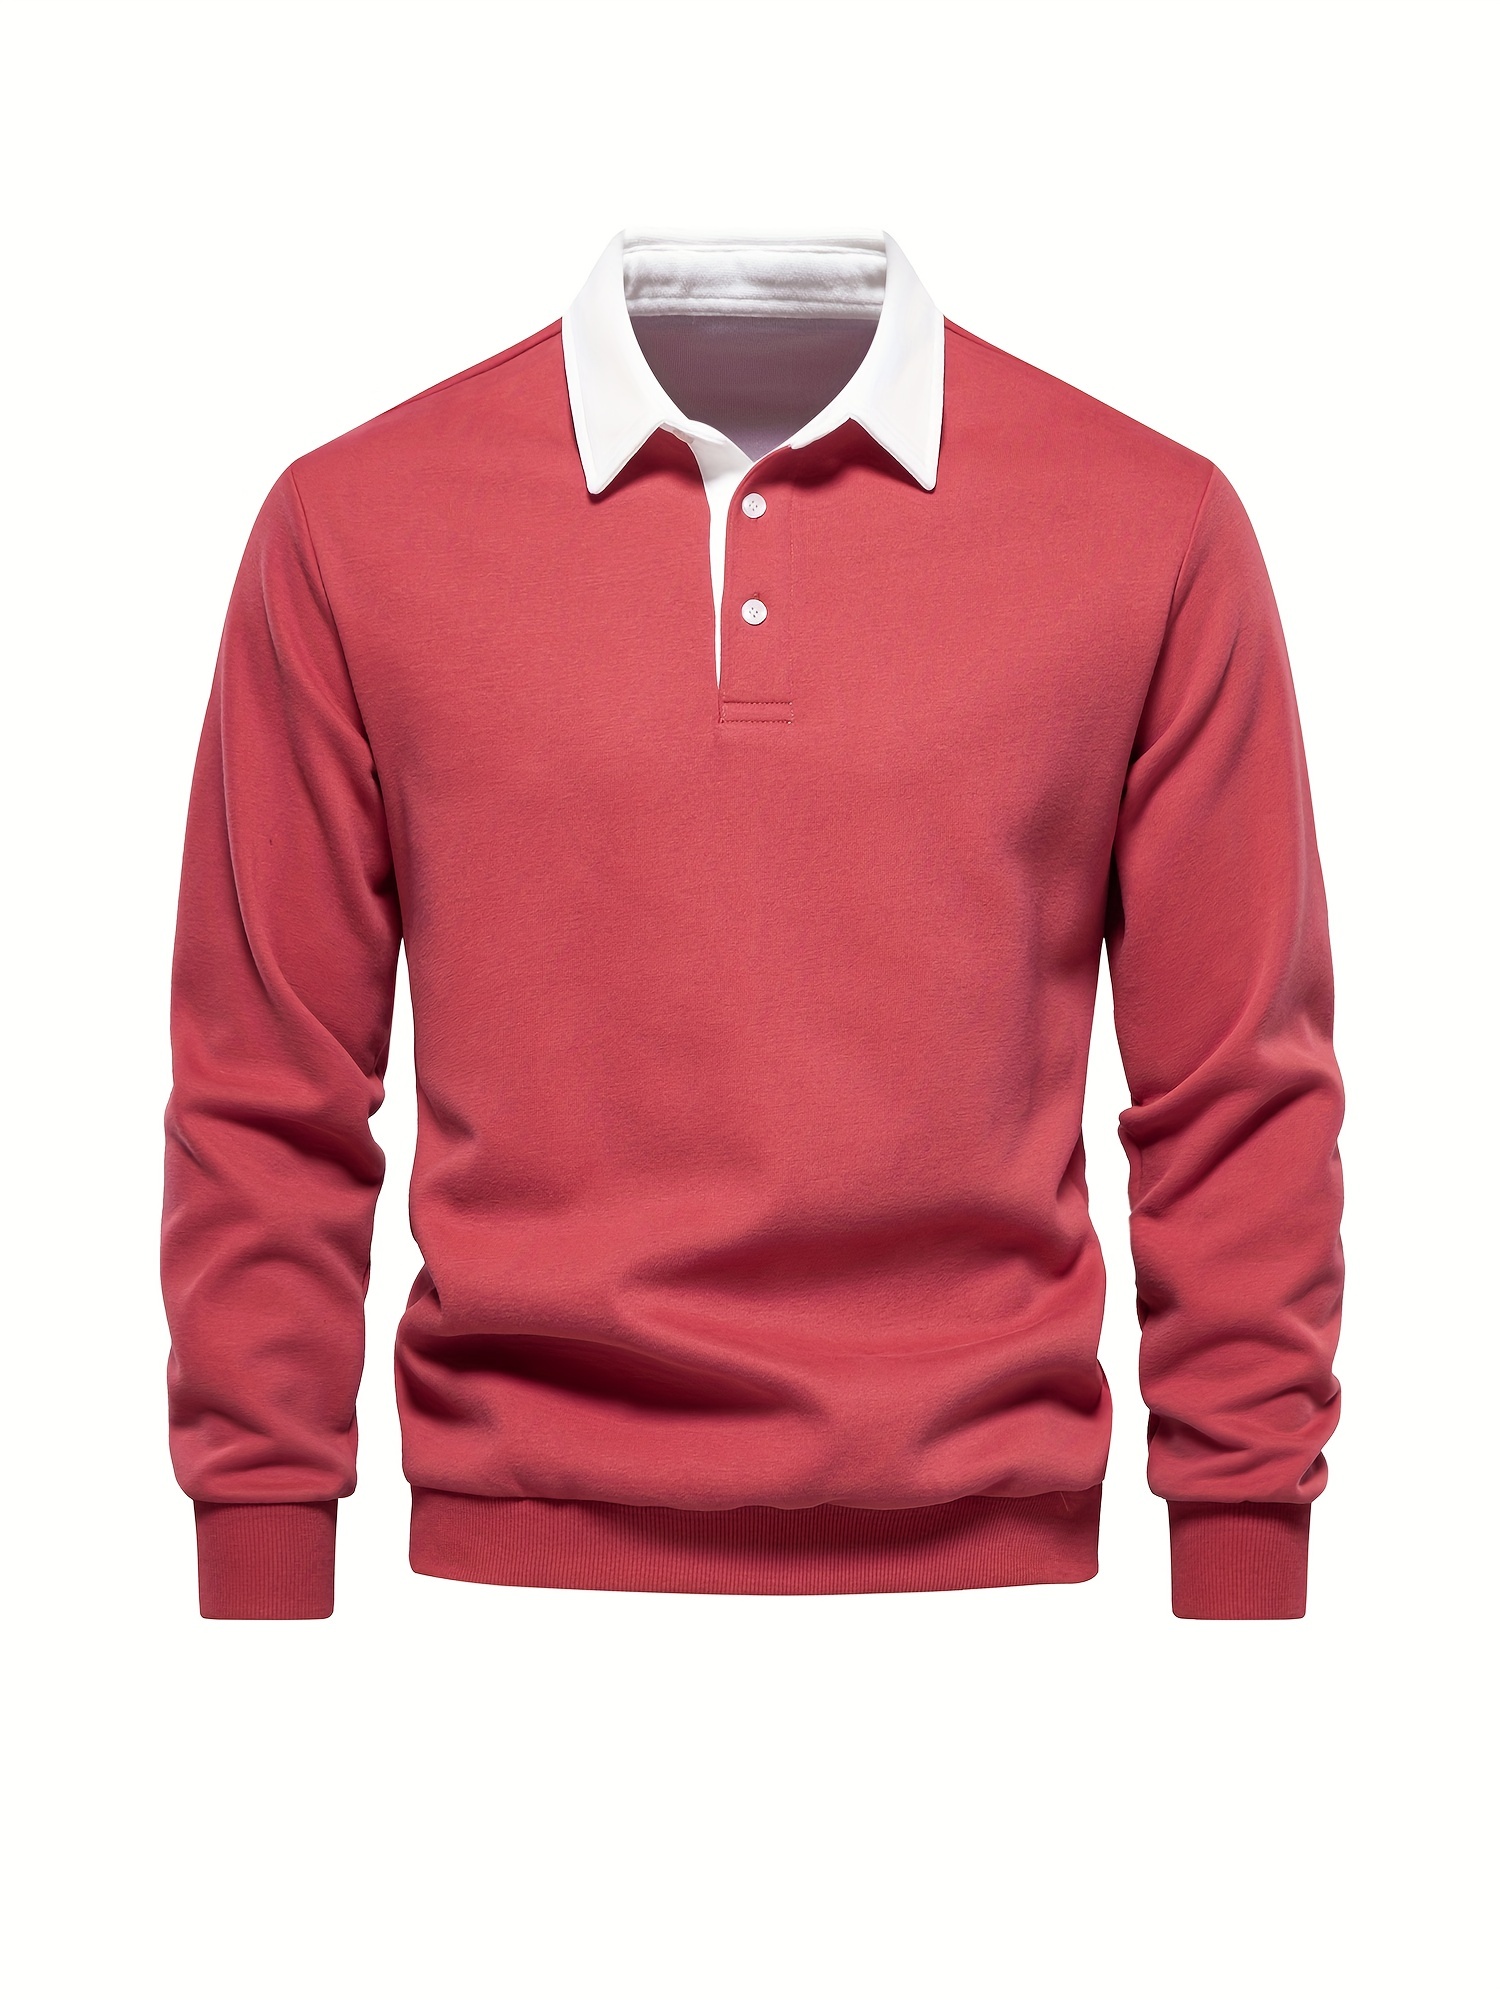 Vintage 00s Cotton Colour-Block Navy Gant Rugby Shirt - Large